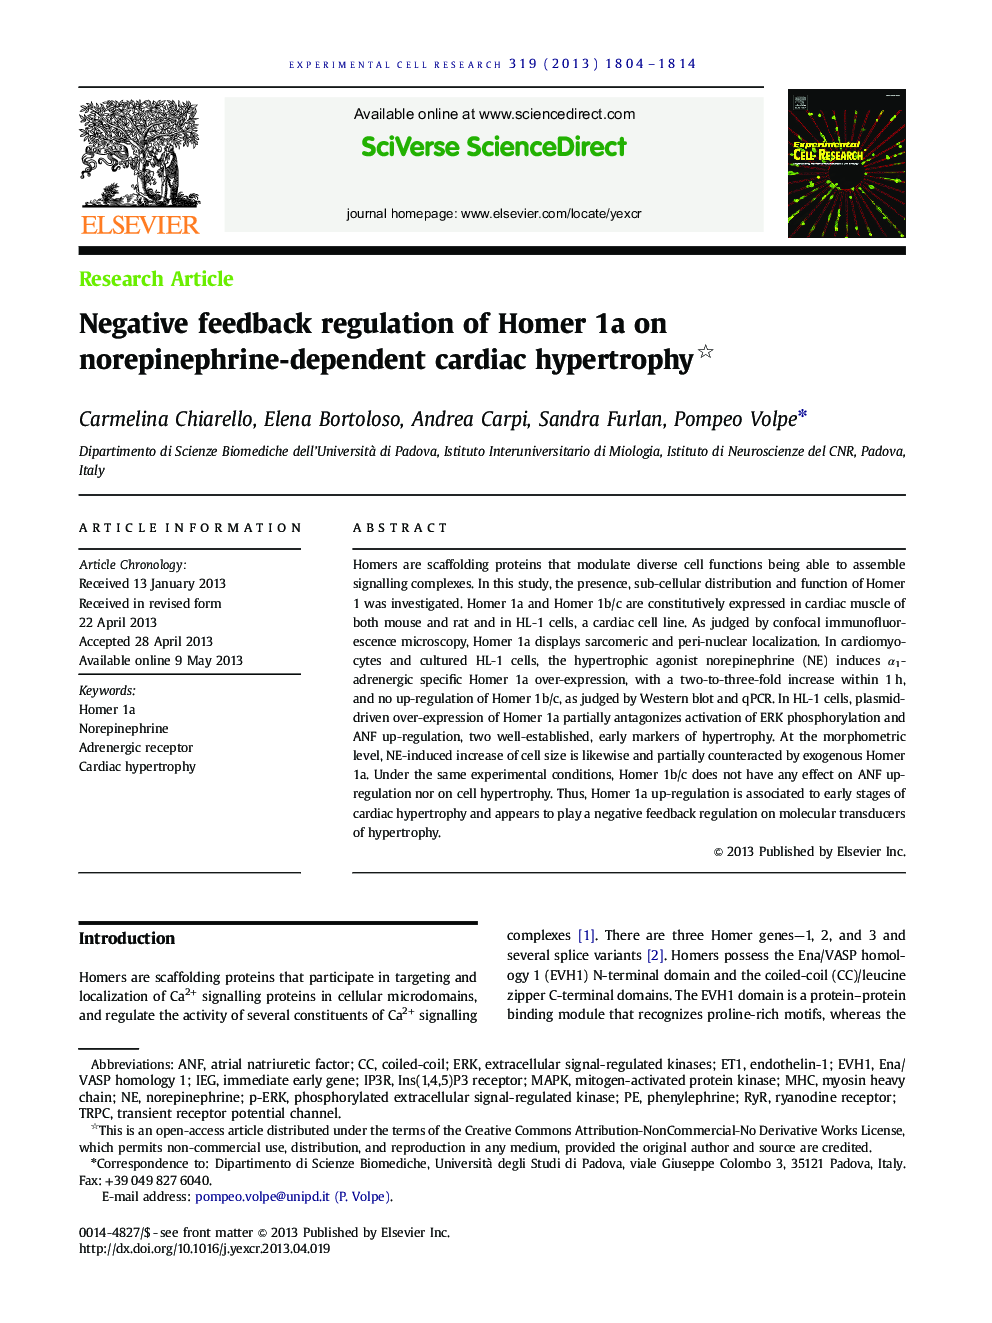 Negative feedback regulation of Homer 1a on norepinephrine-dependent cardiac hypertrophy